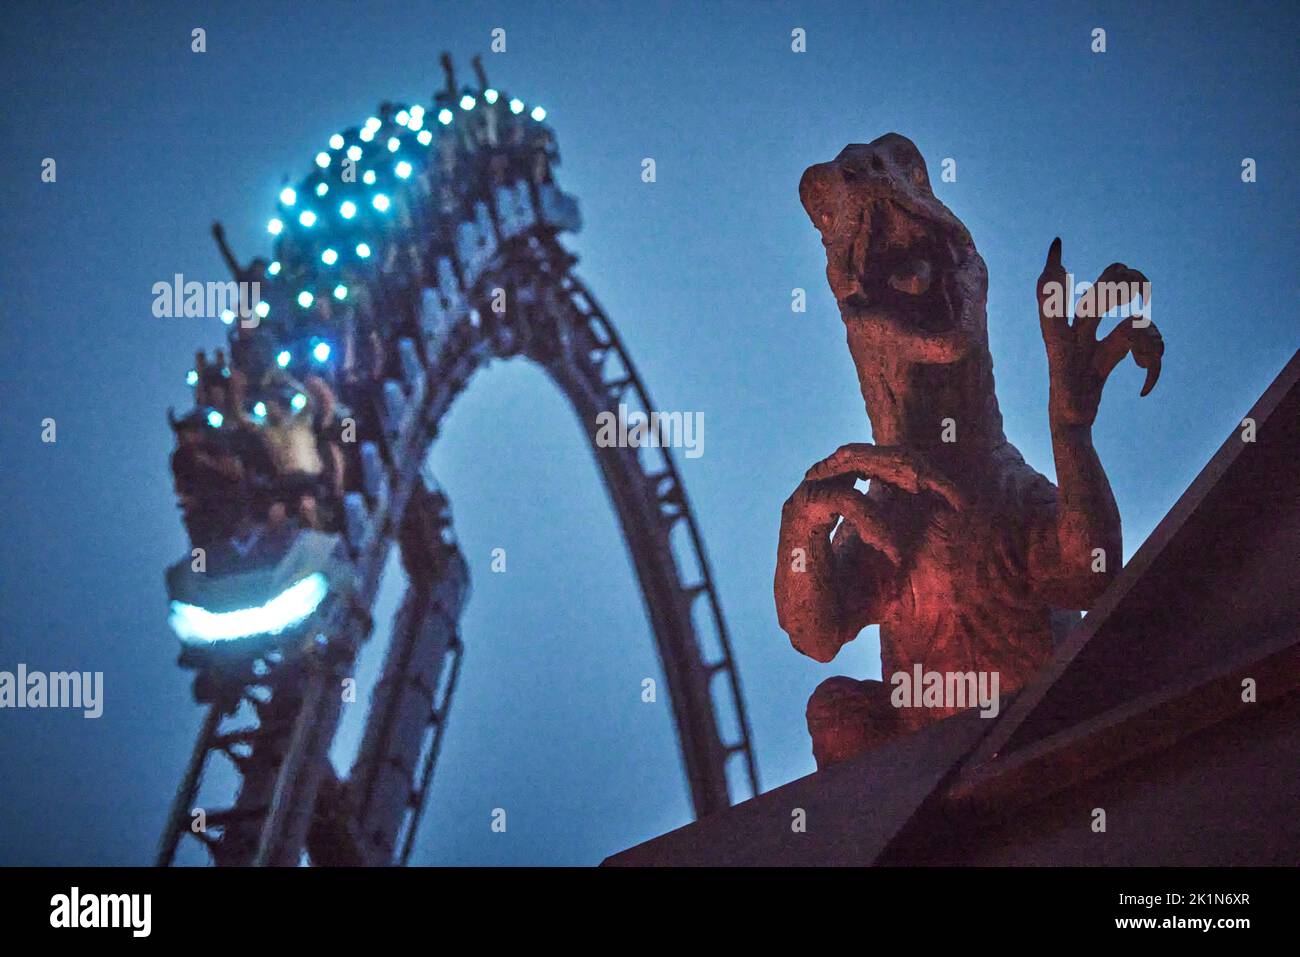 Universal Studios Florida theme park Jurassic World VelociCoaster Stock Photo